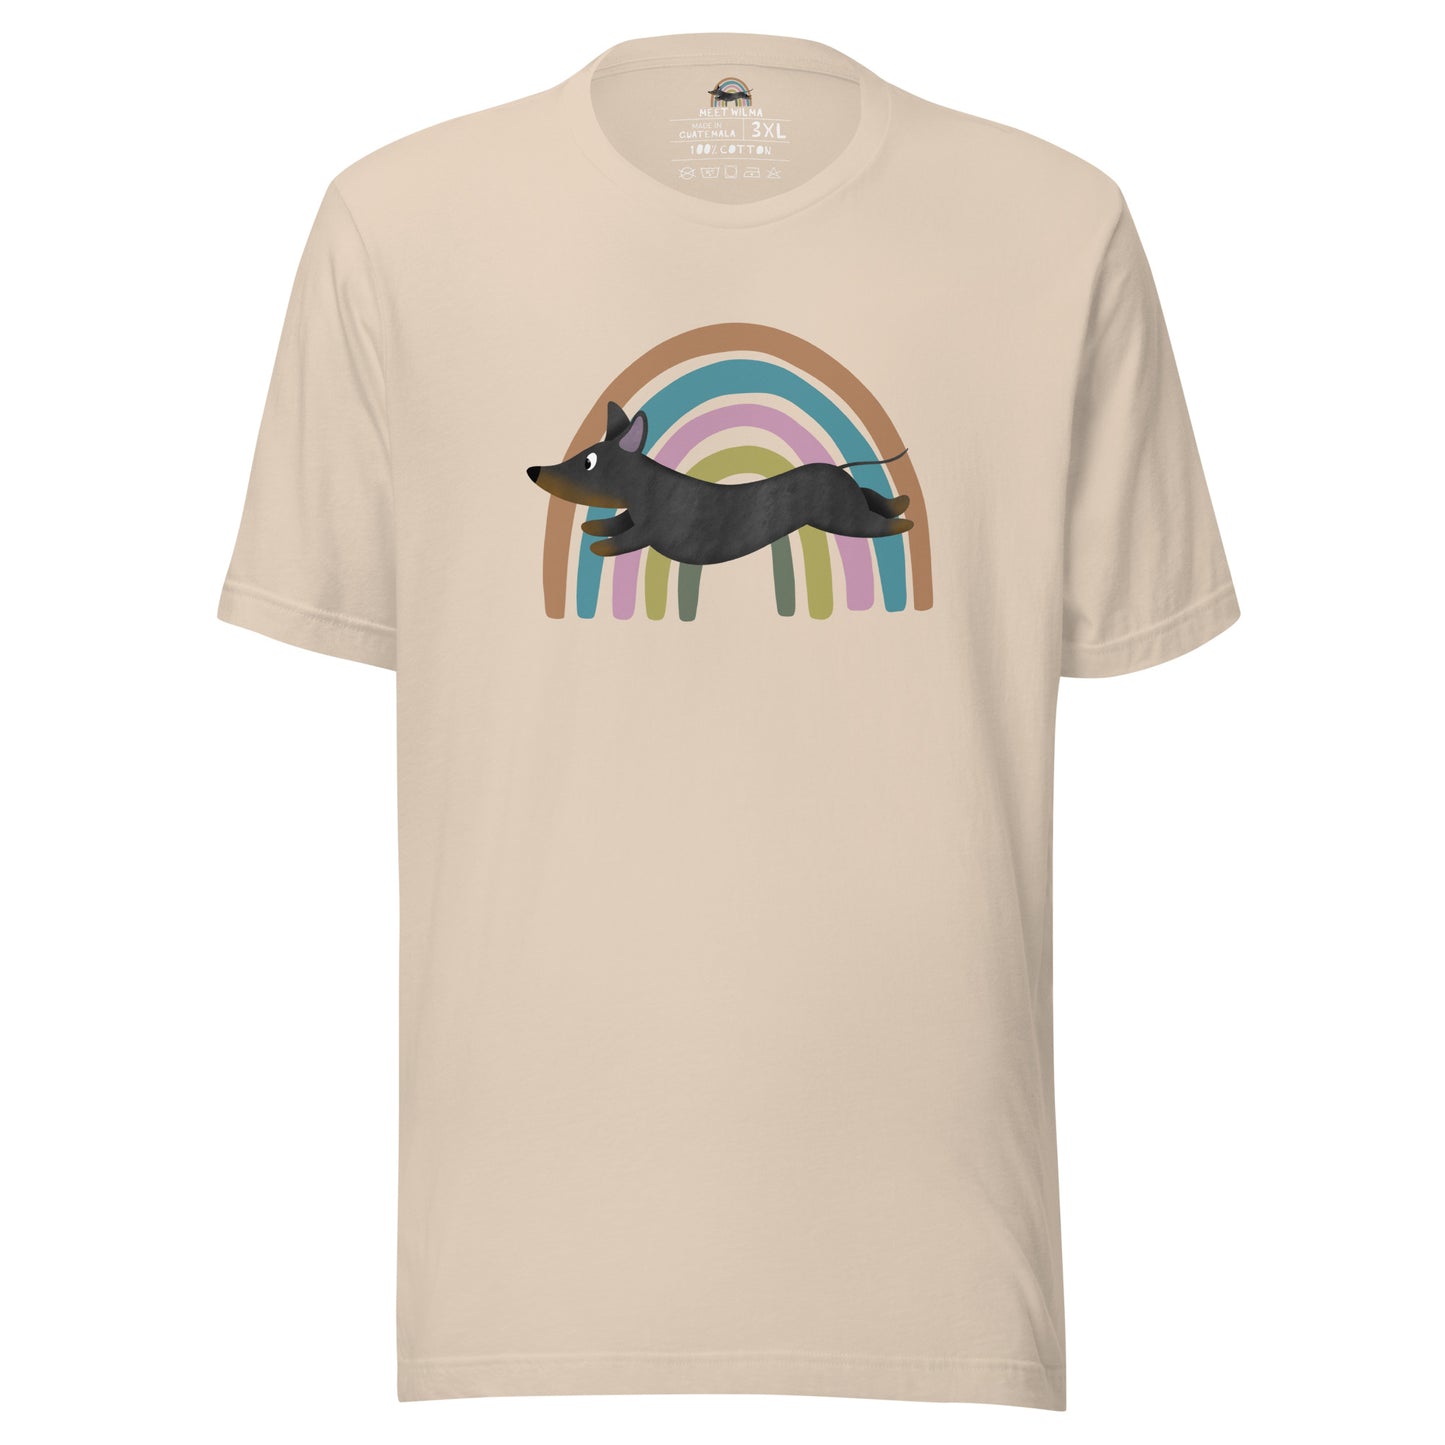 Unisex Shirt "Rainbow"